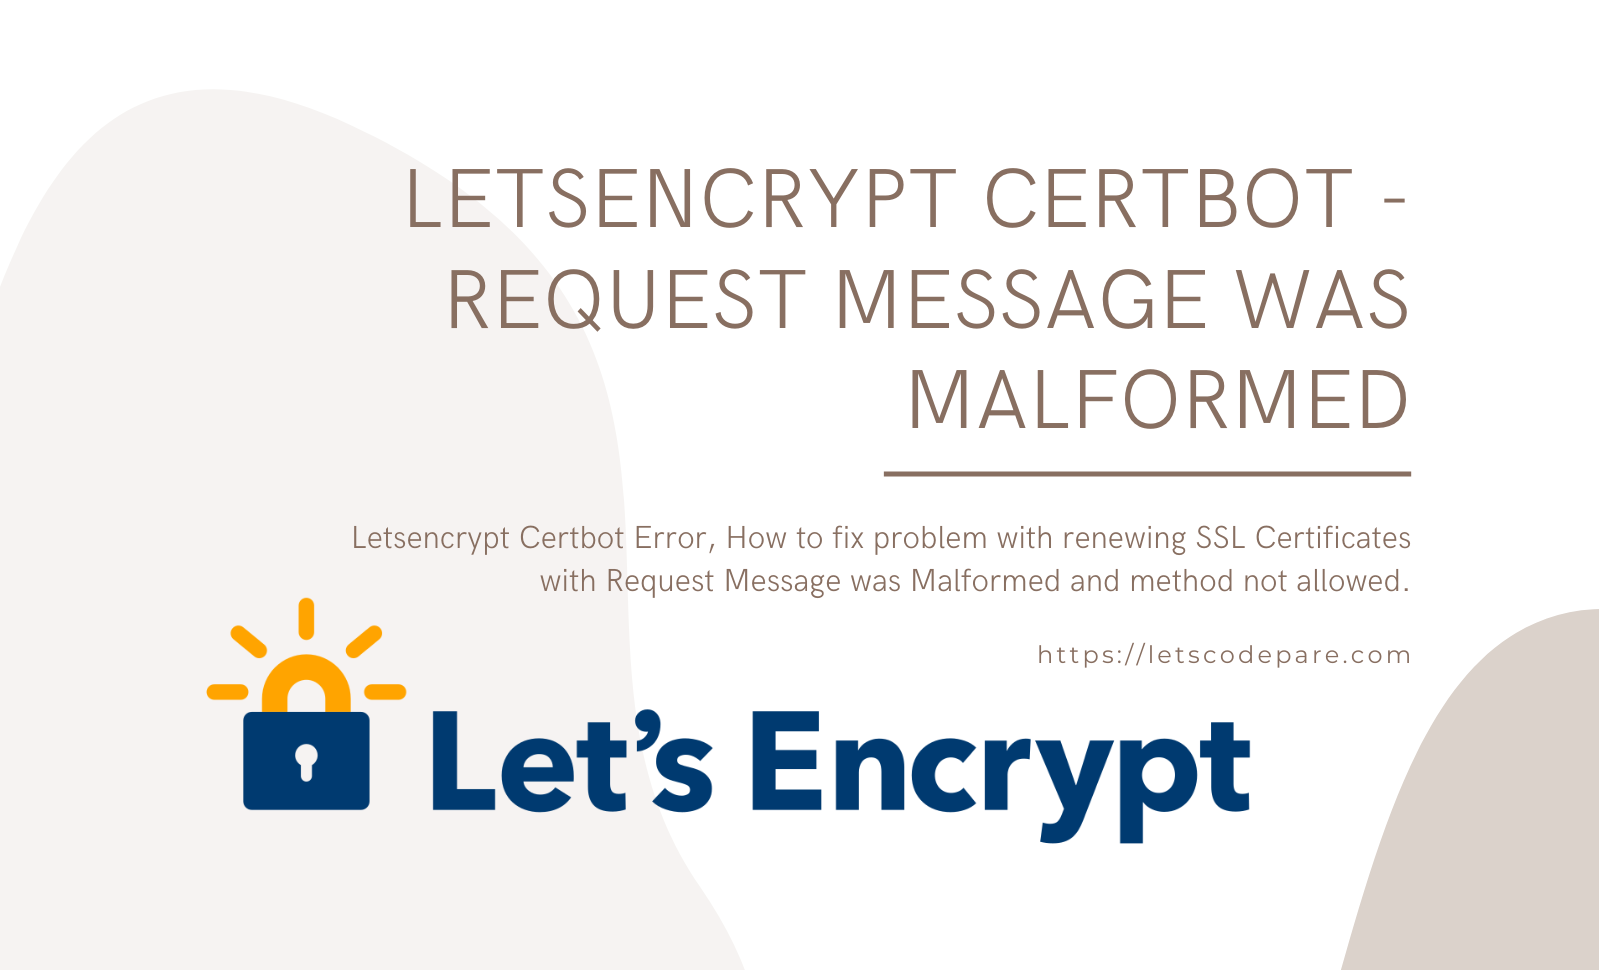 Let's Encrypt Certbot - Request Message was Malformed